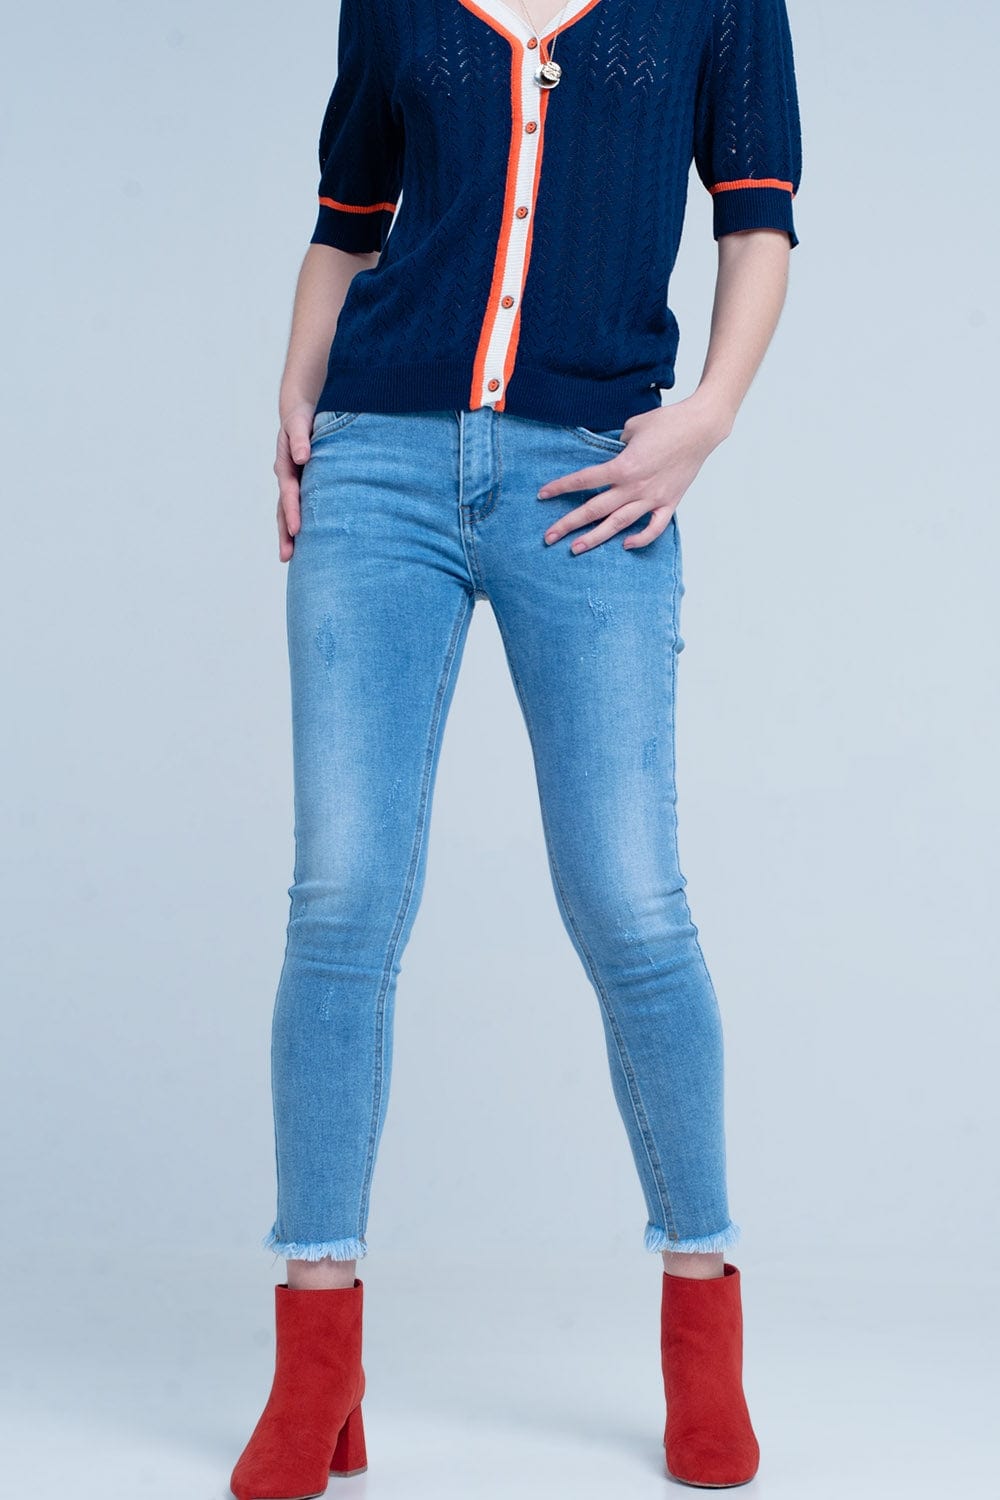 Q2 Women's Jean Blue Fringed Skinny Jeans